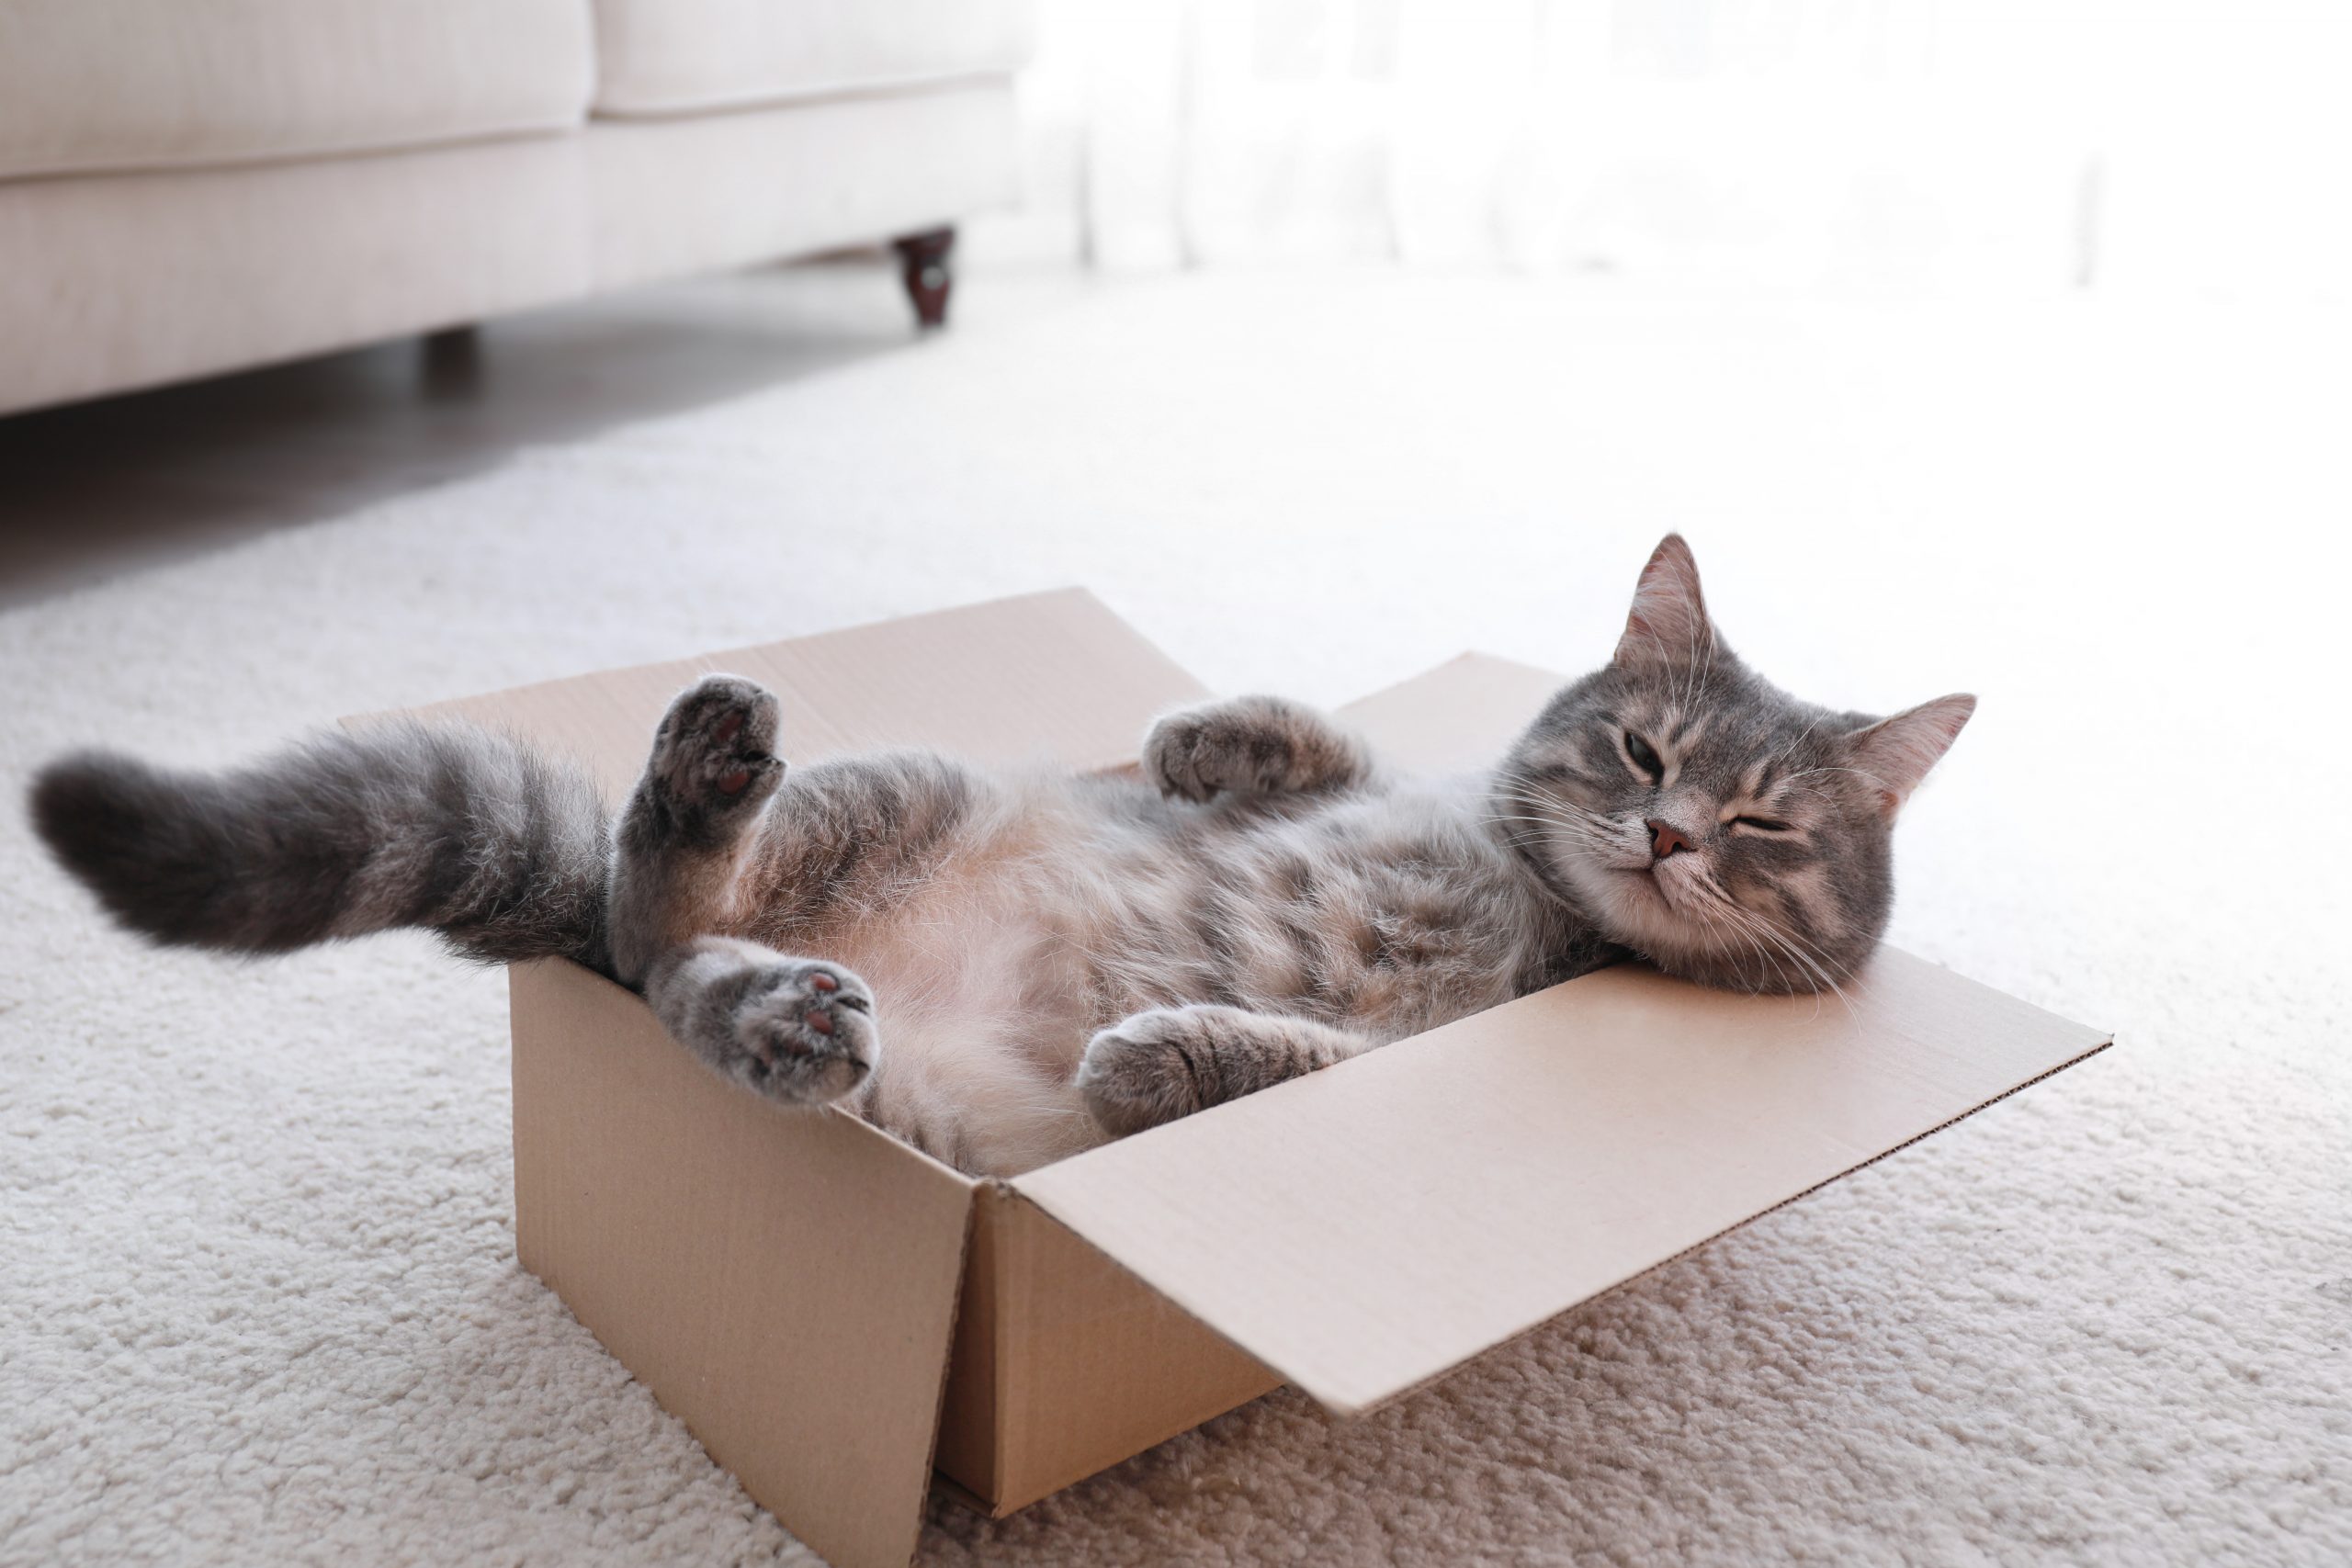 A happy cat sleeping in a box